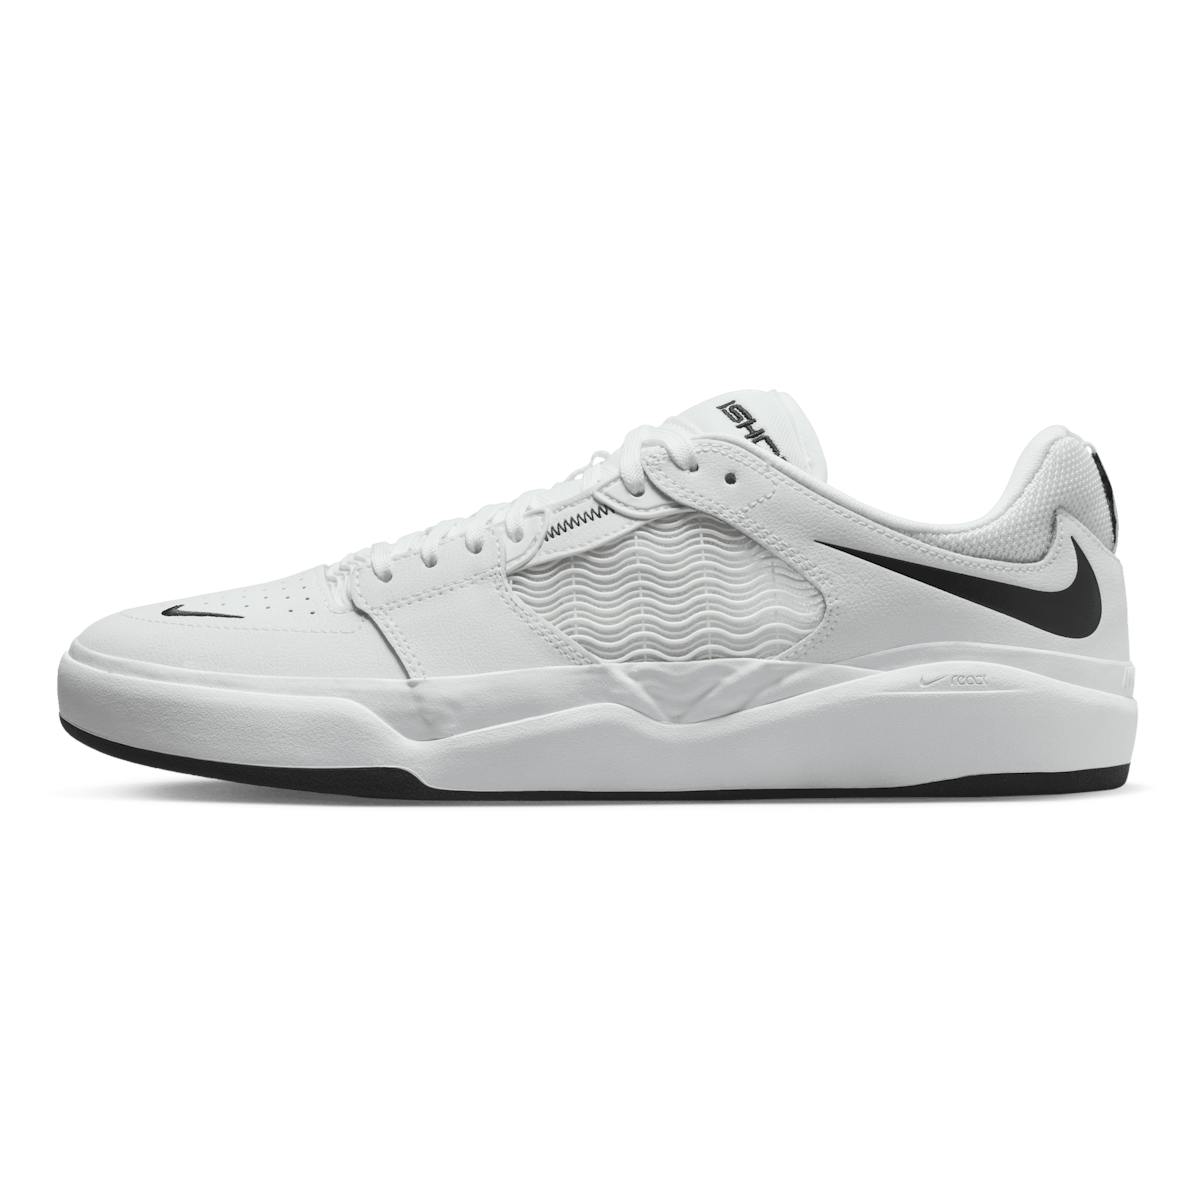 Nike SB Ishod Wair Premium White Black